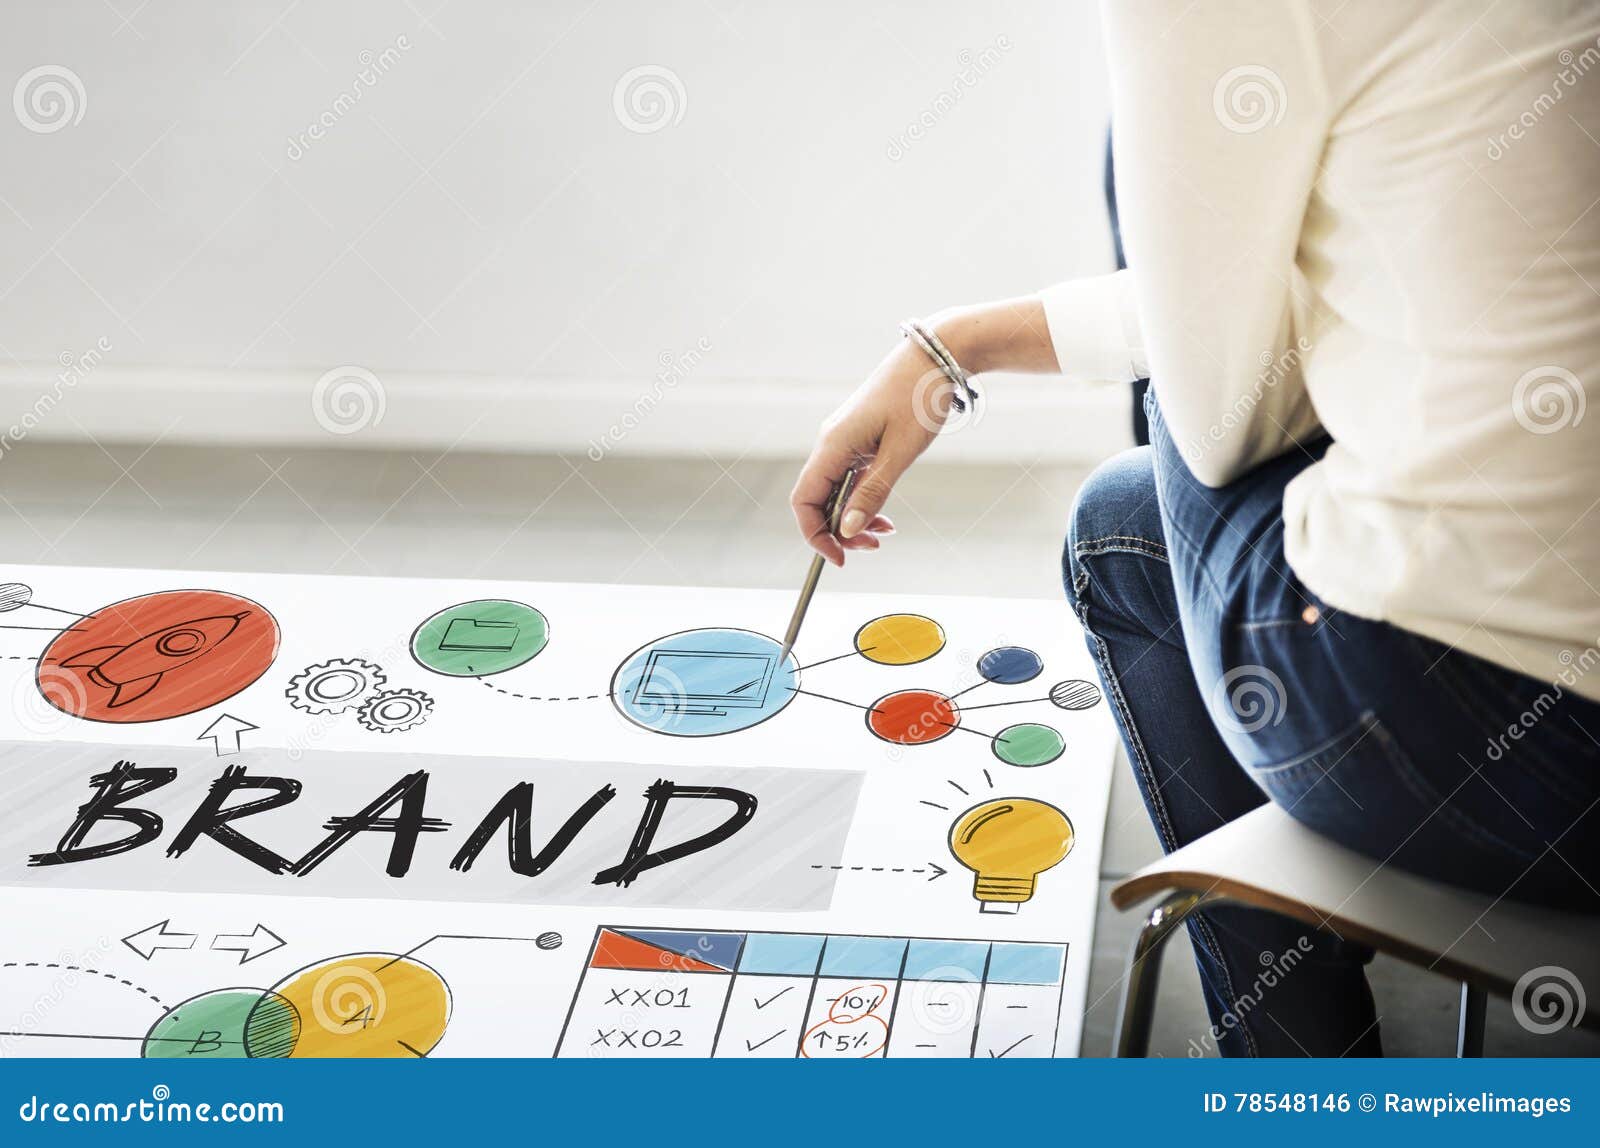 brand branding advertising trademark marketing concept